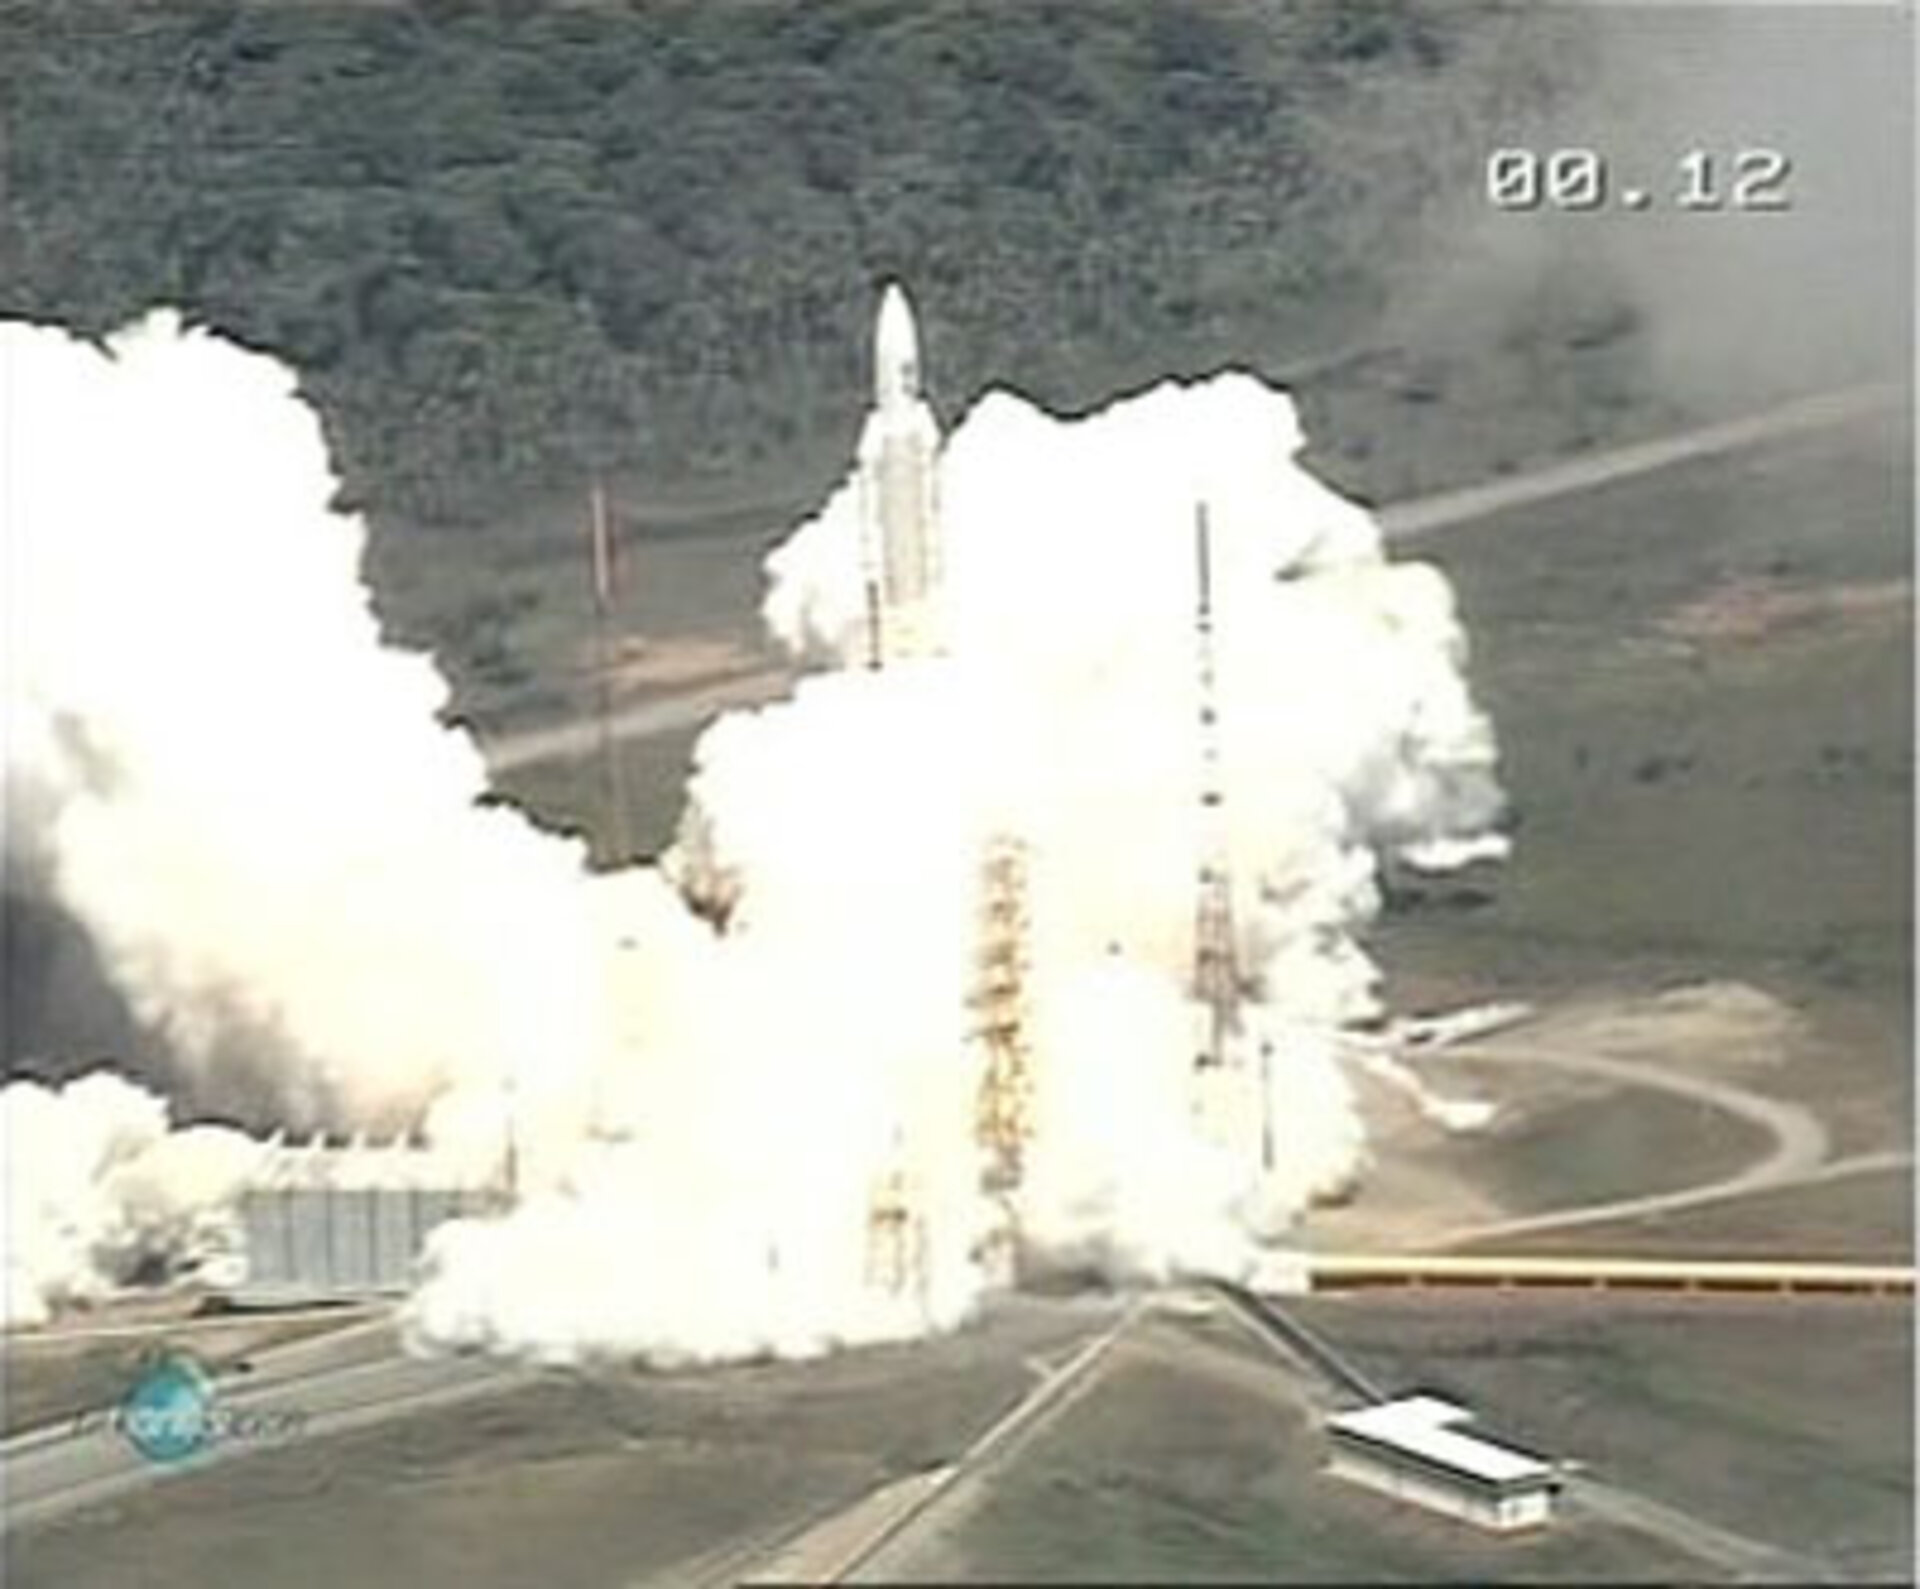 Ariane 5 at liftoff